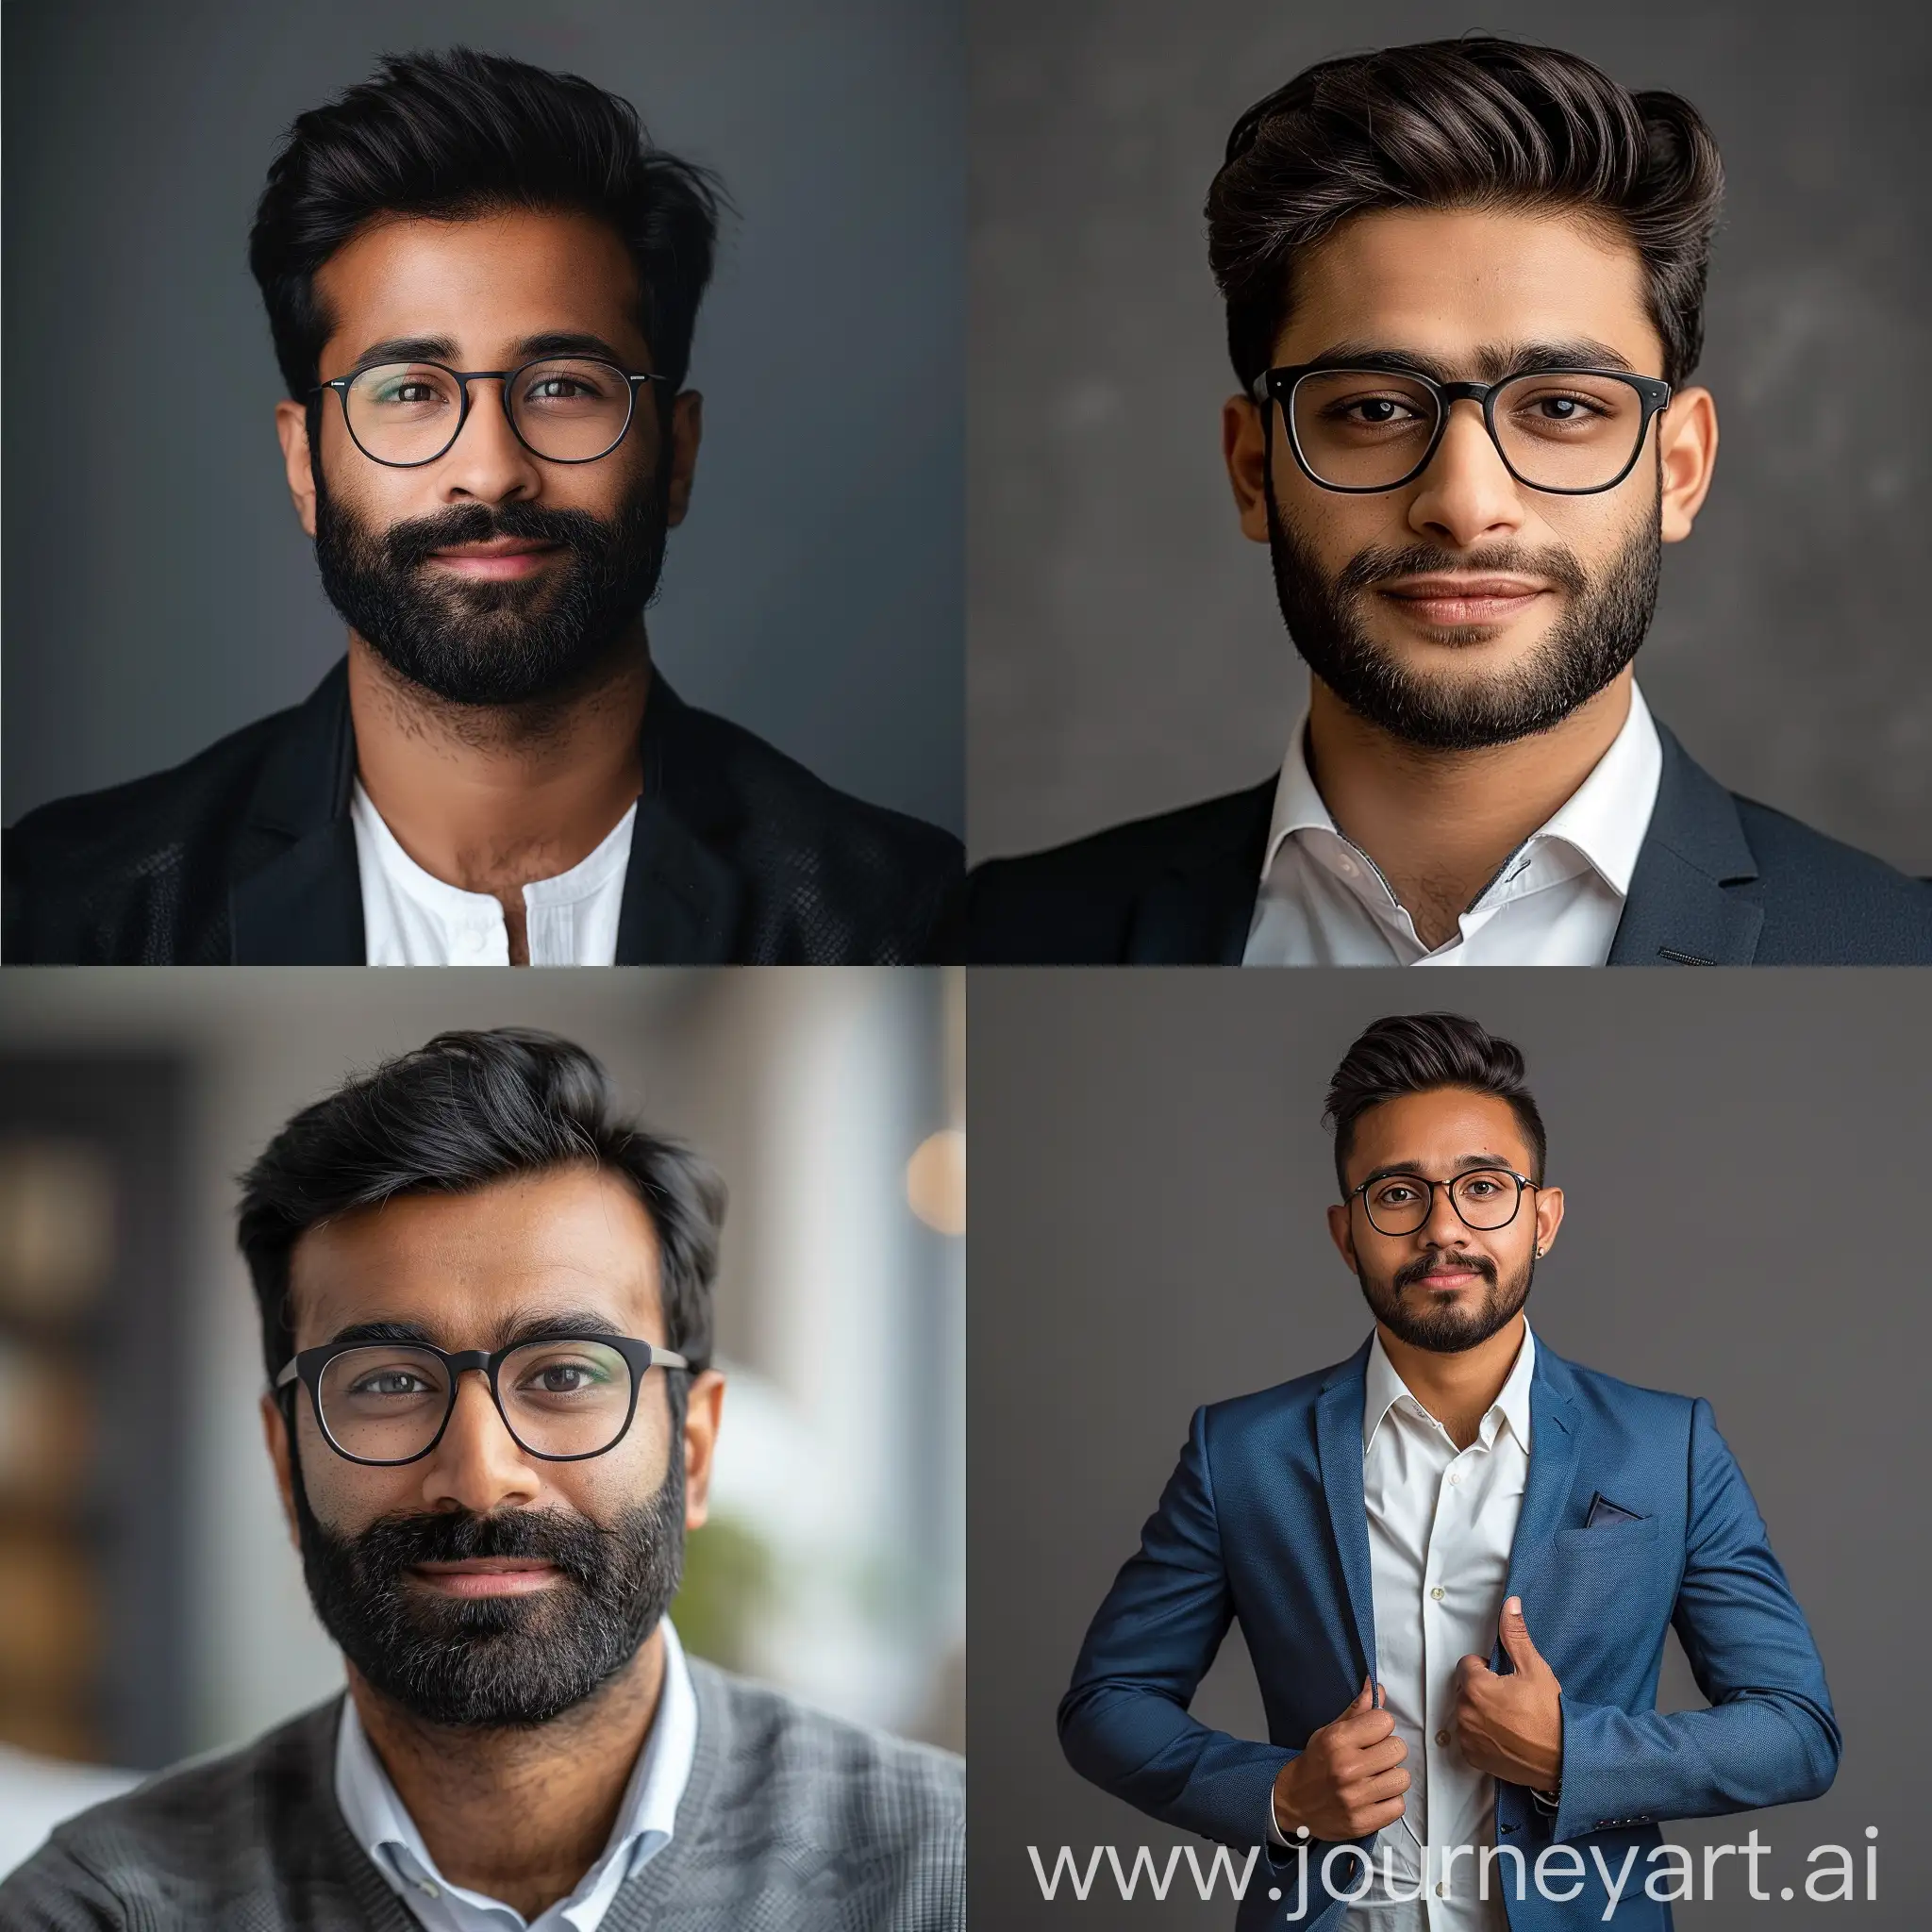 Confident-Indian-Man-with-Glasses-in-SmartCasual-Attire-for-LinkedIn-Profile